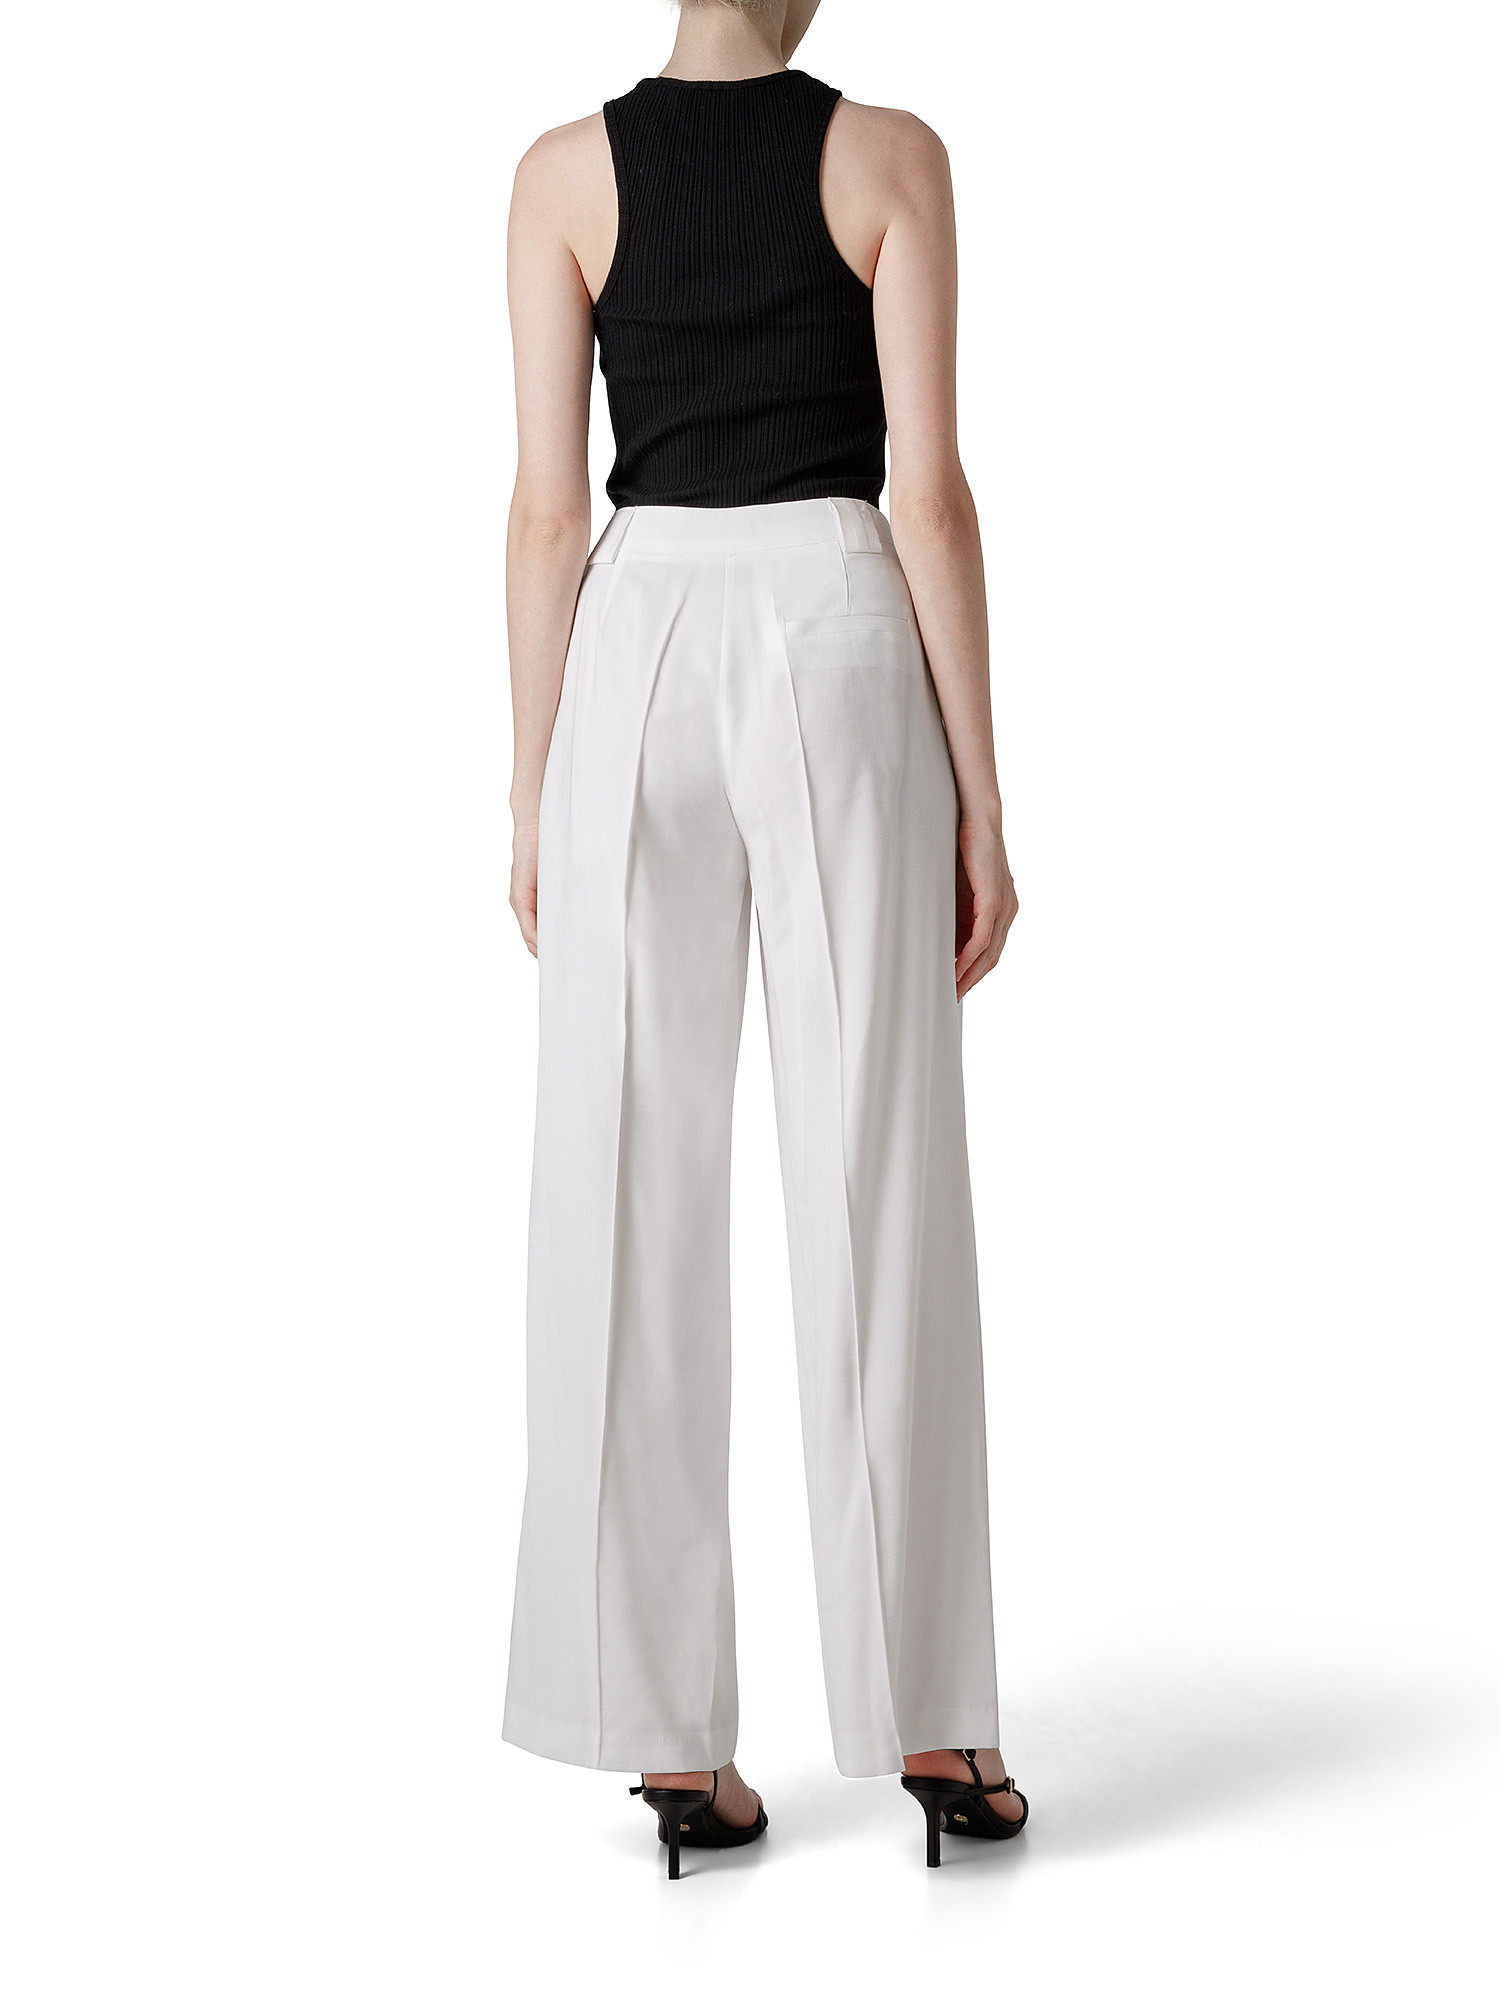 Pantalone, Bianco, large image number 3